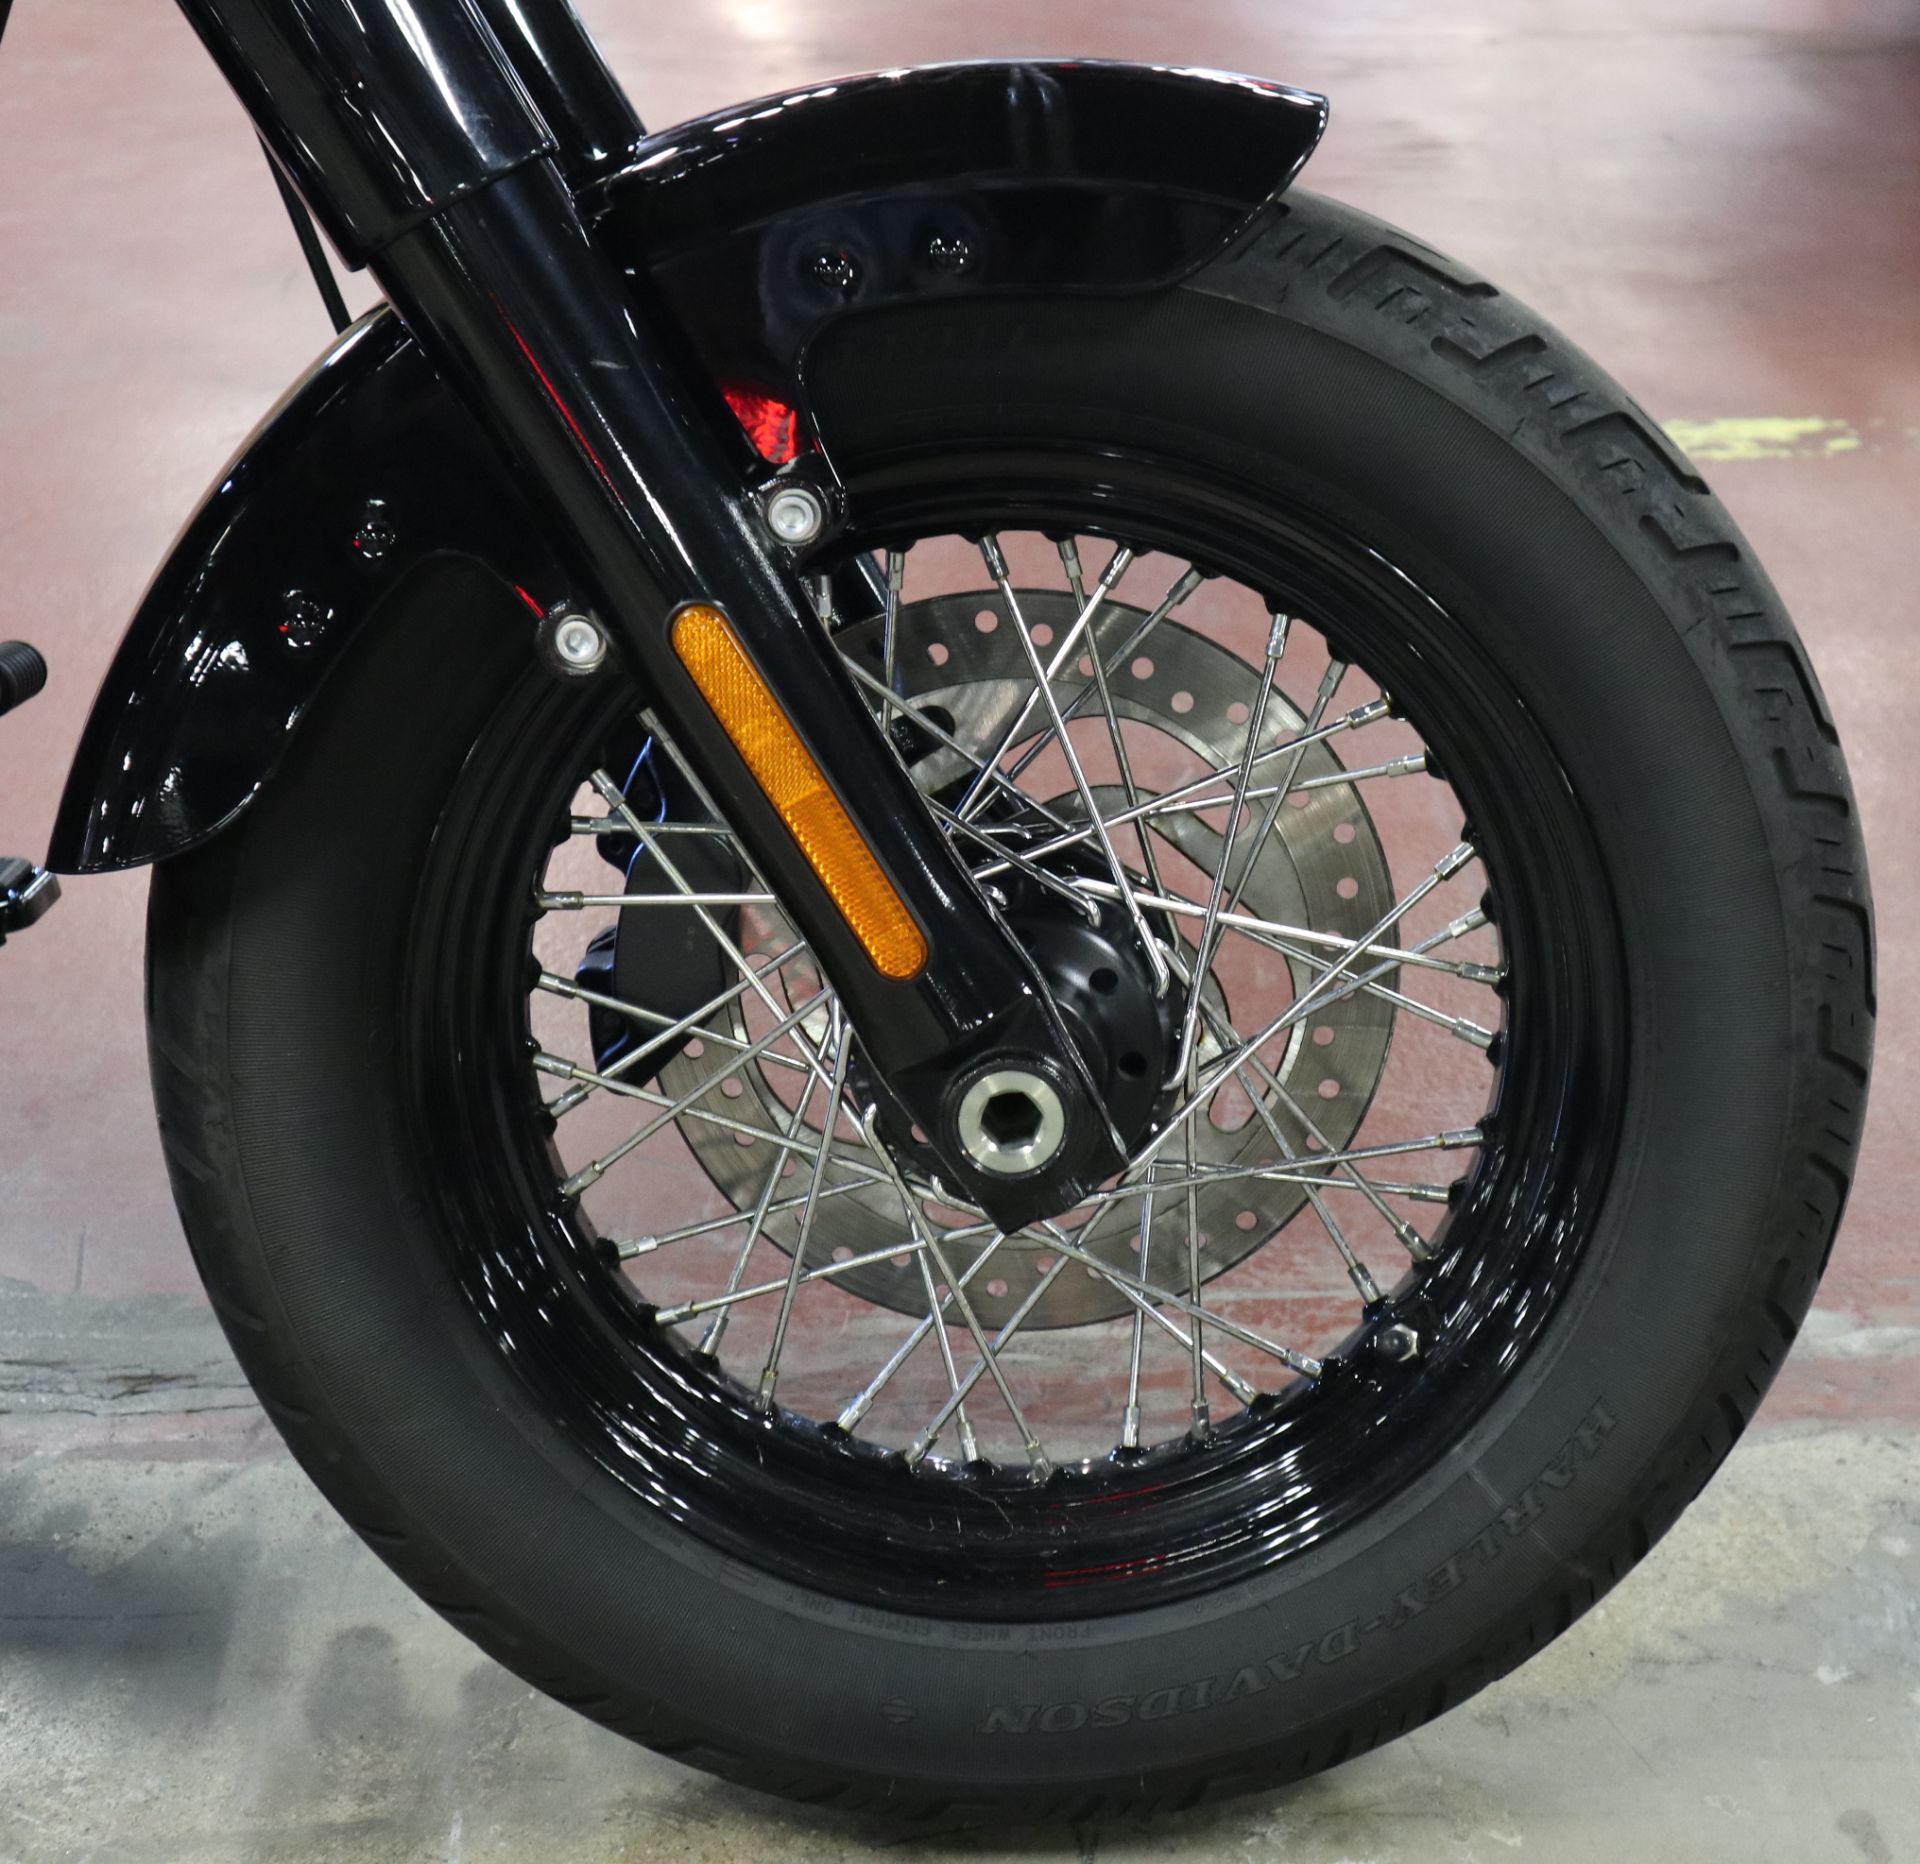 2020 Harley-Davidson Softail Slim® in New London, Connecticut - Photo 15